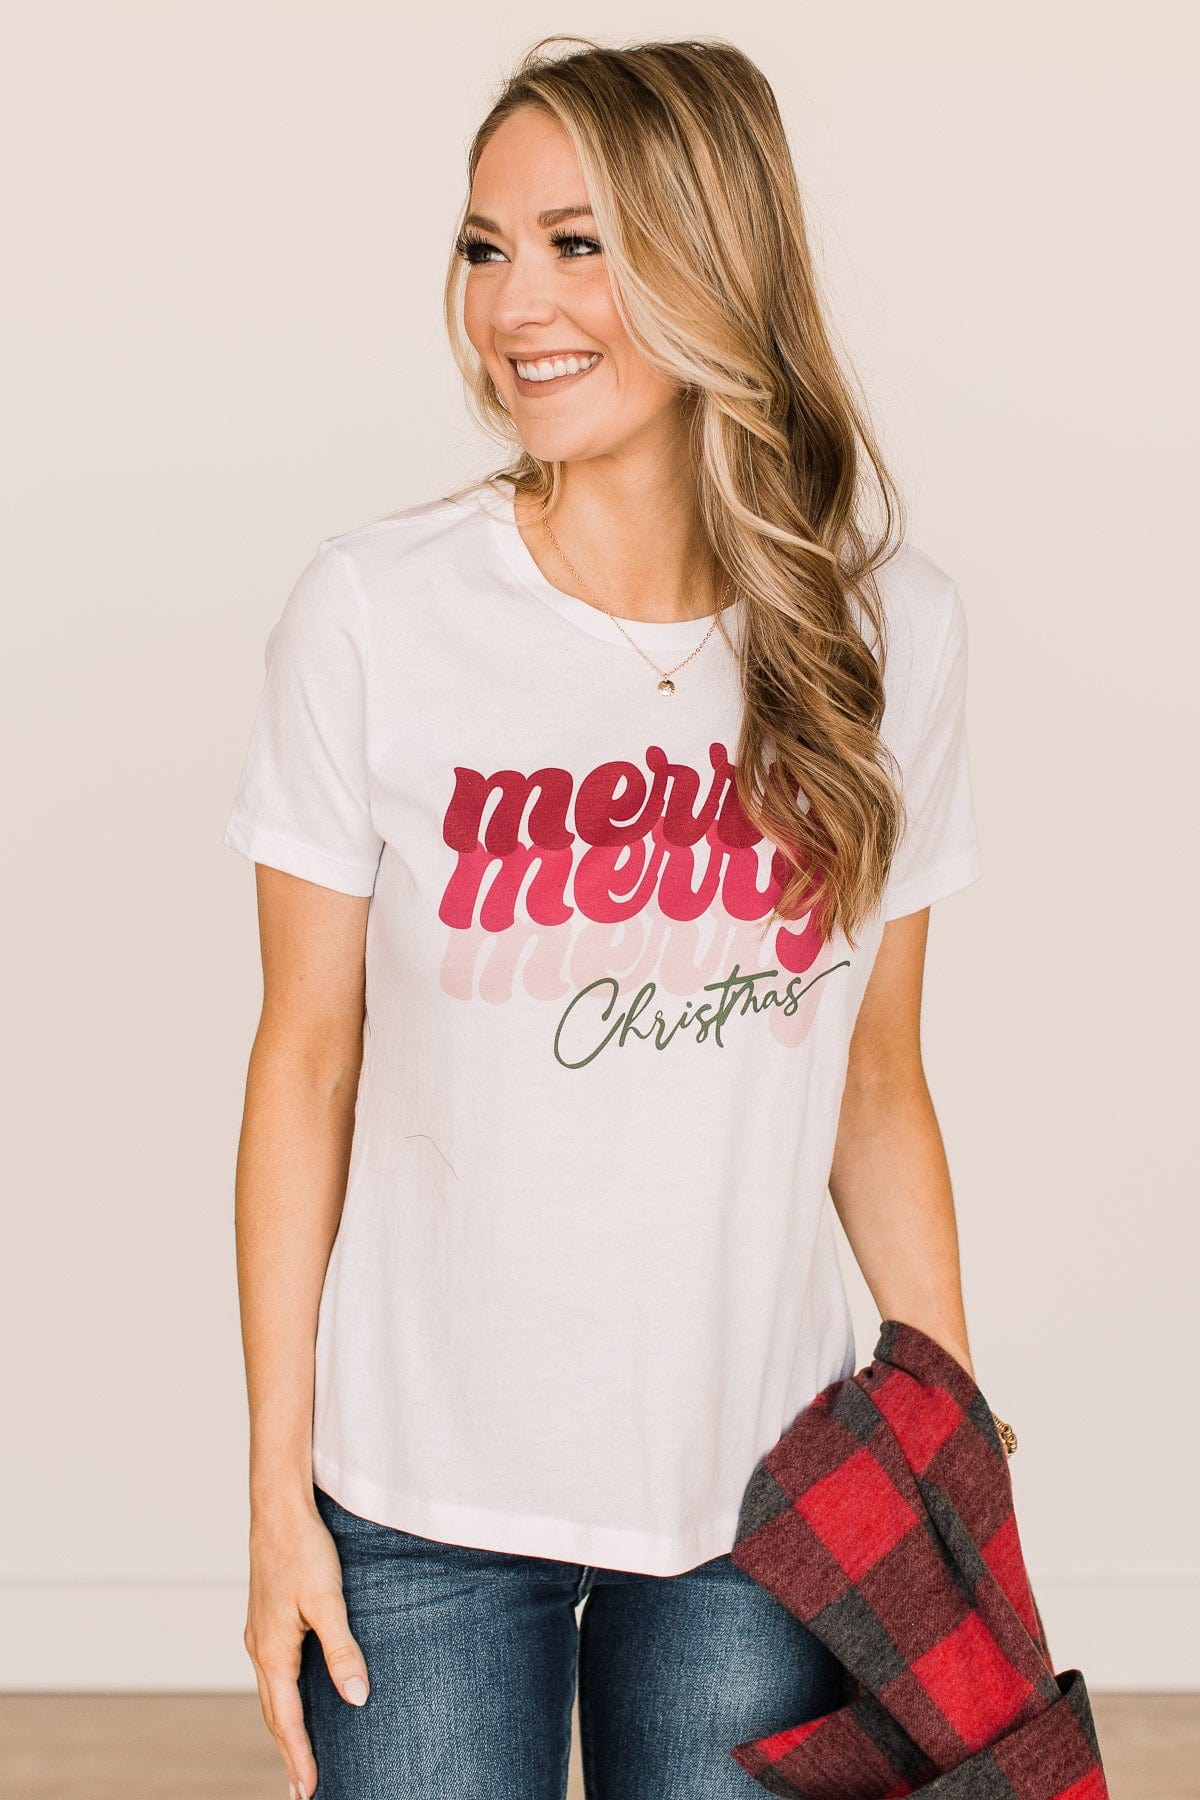 "Merry, Merry, Merry Christmas" Graphic Tee- White